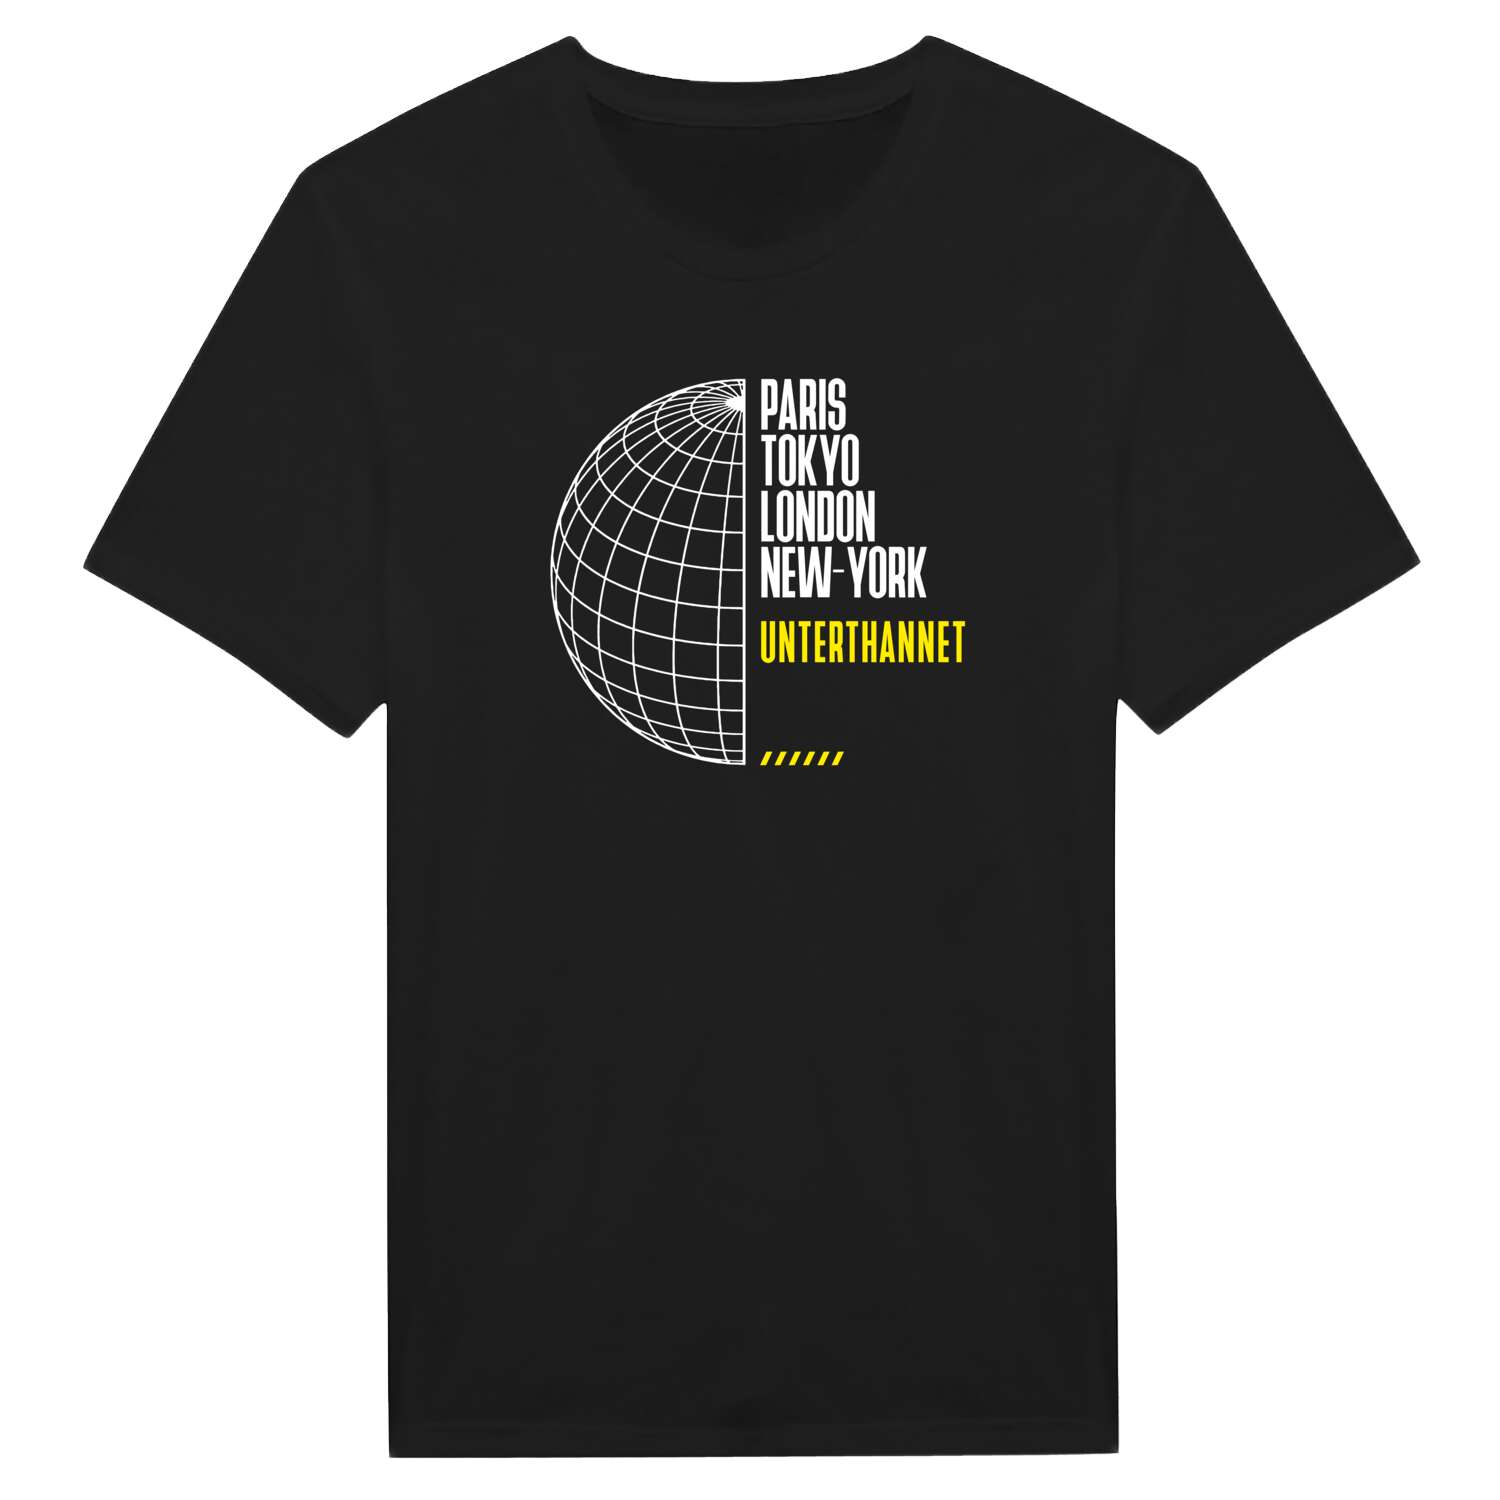 Unterthannet T-Shirt »Paris Tokyo London«